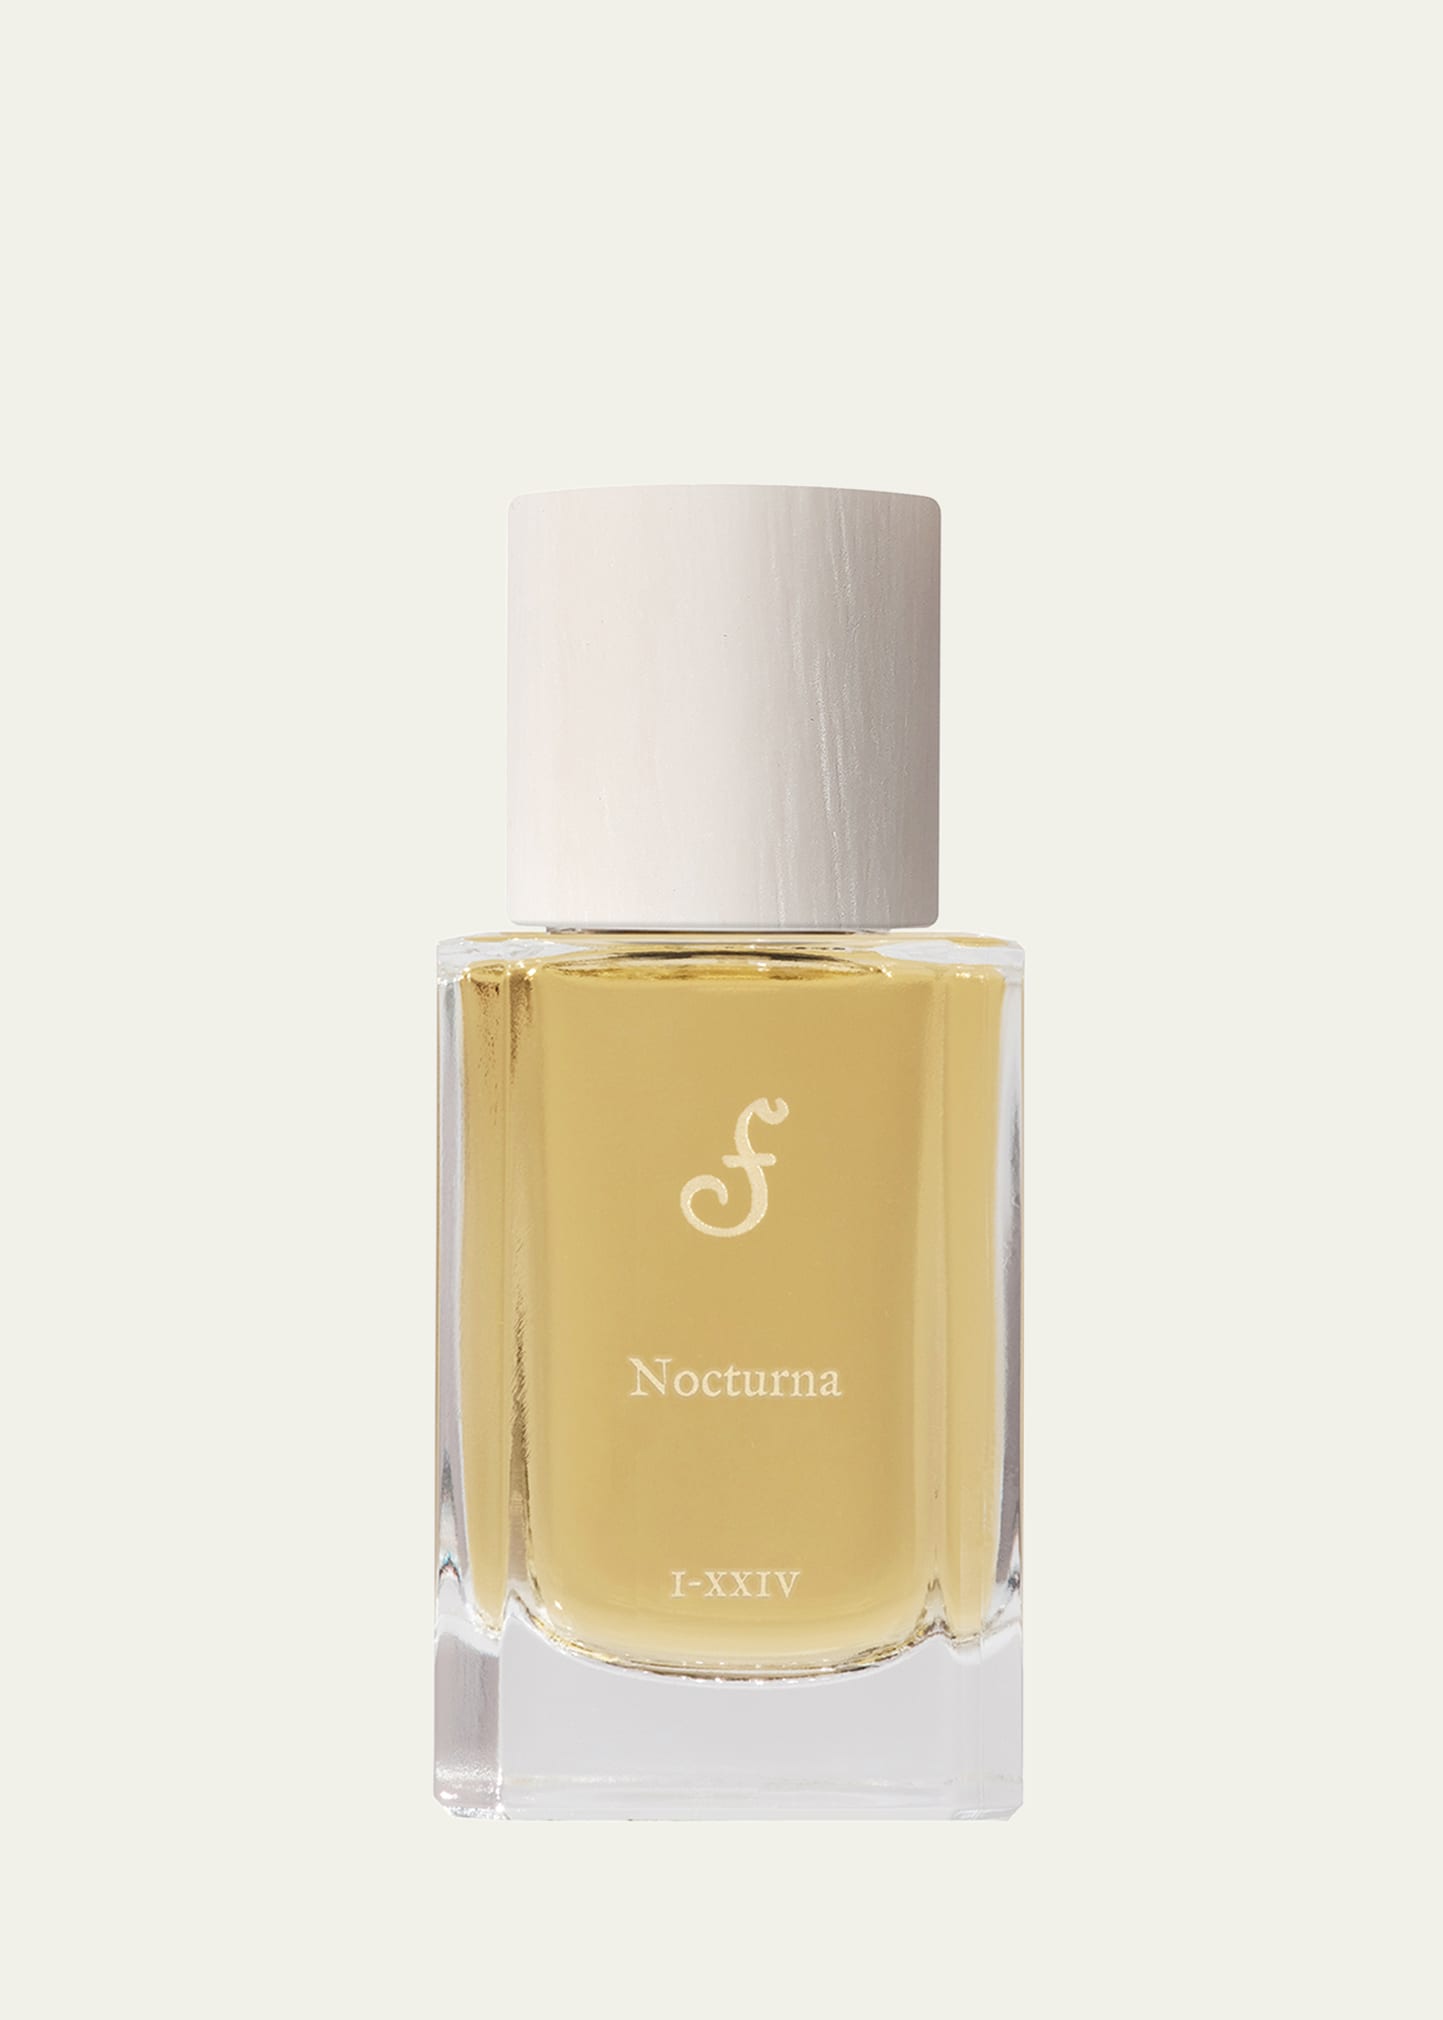 Nocturna Perfume, 1 oz.